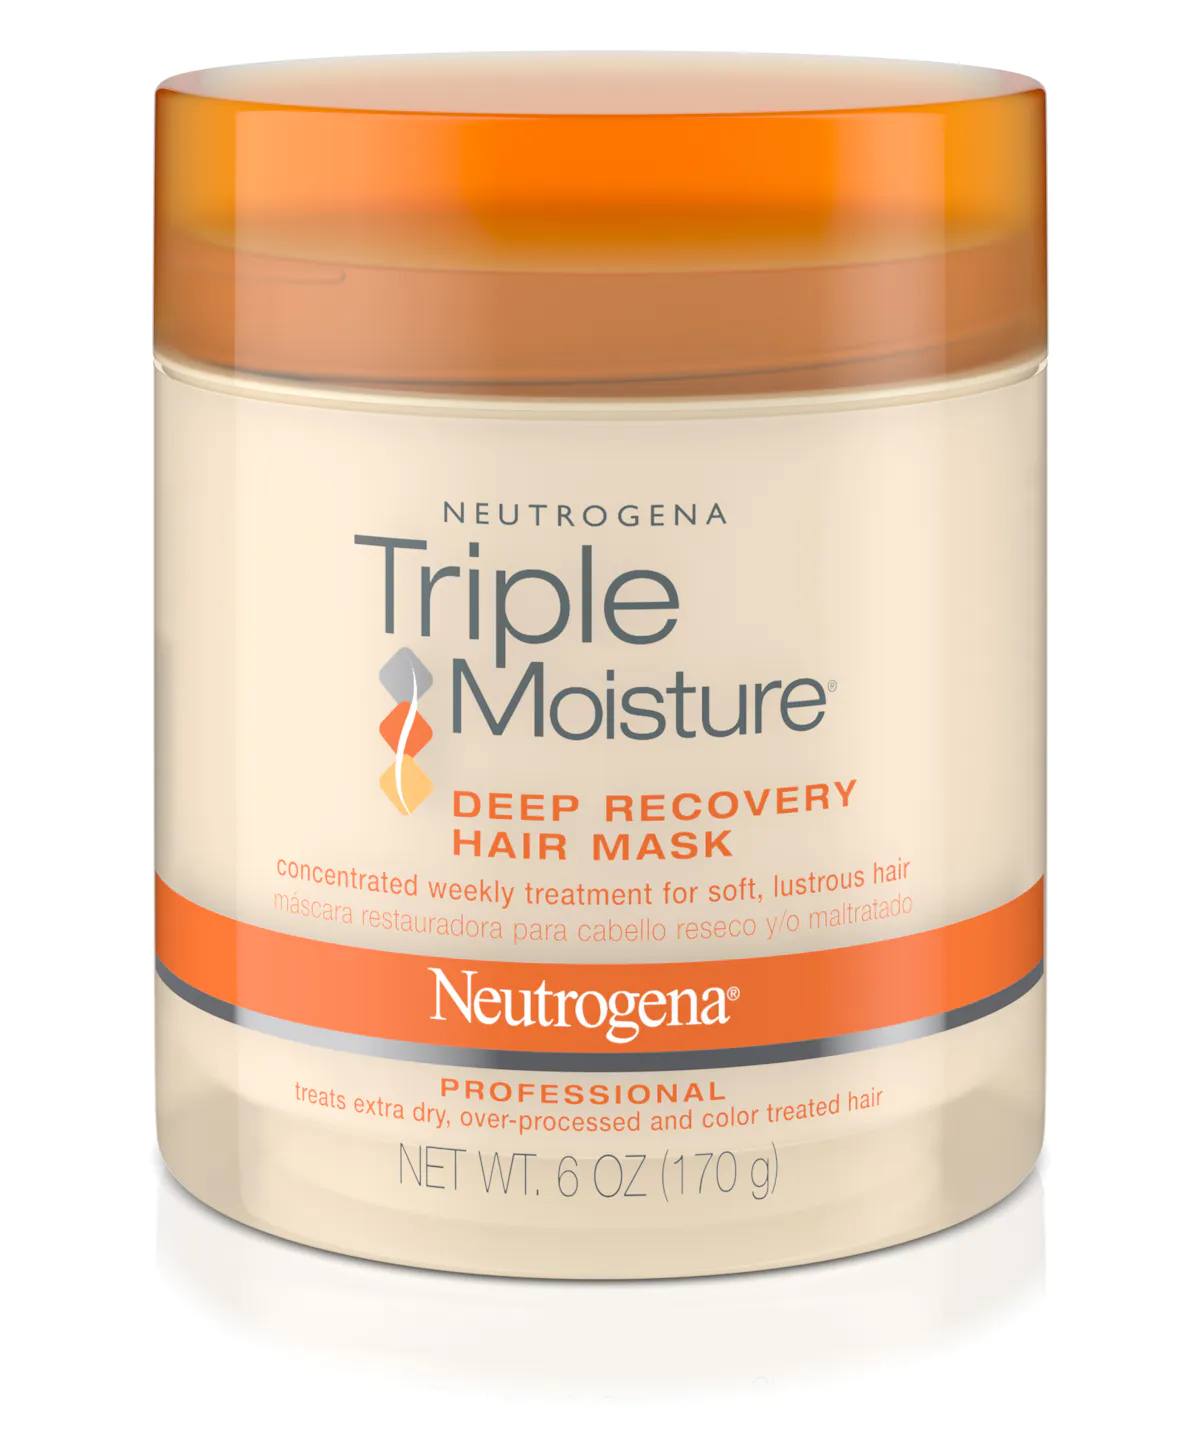 Neutrogena Triple Moisture Deep Recovery Hair Mask